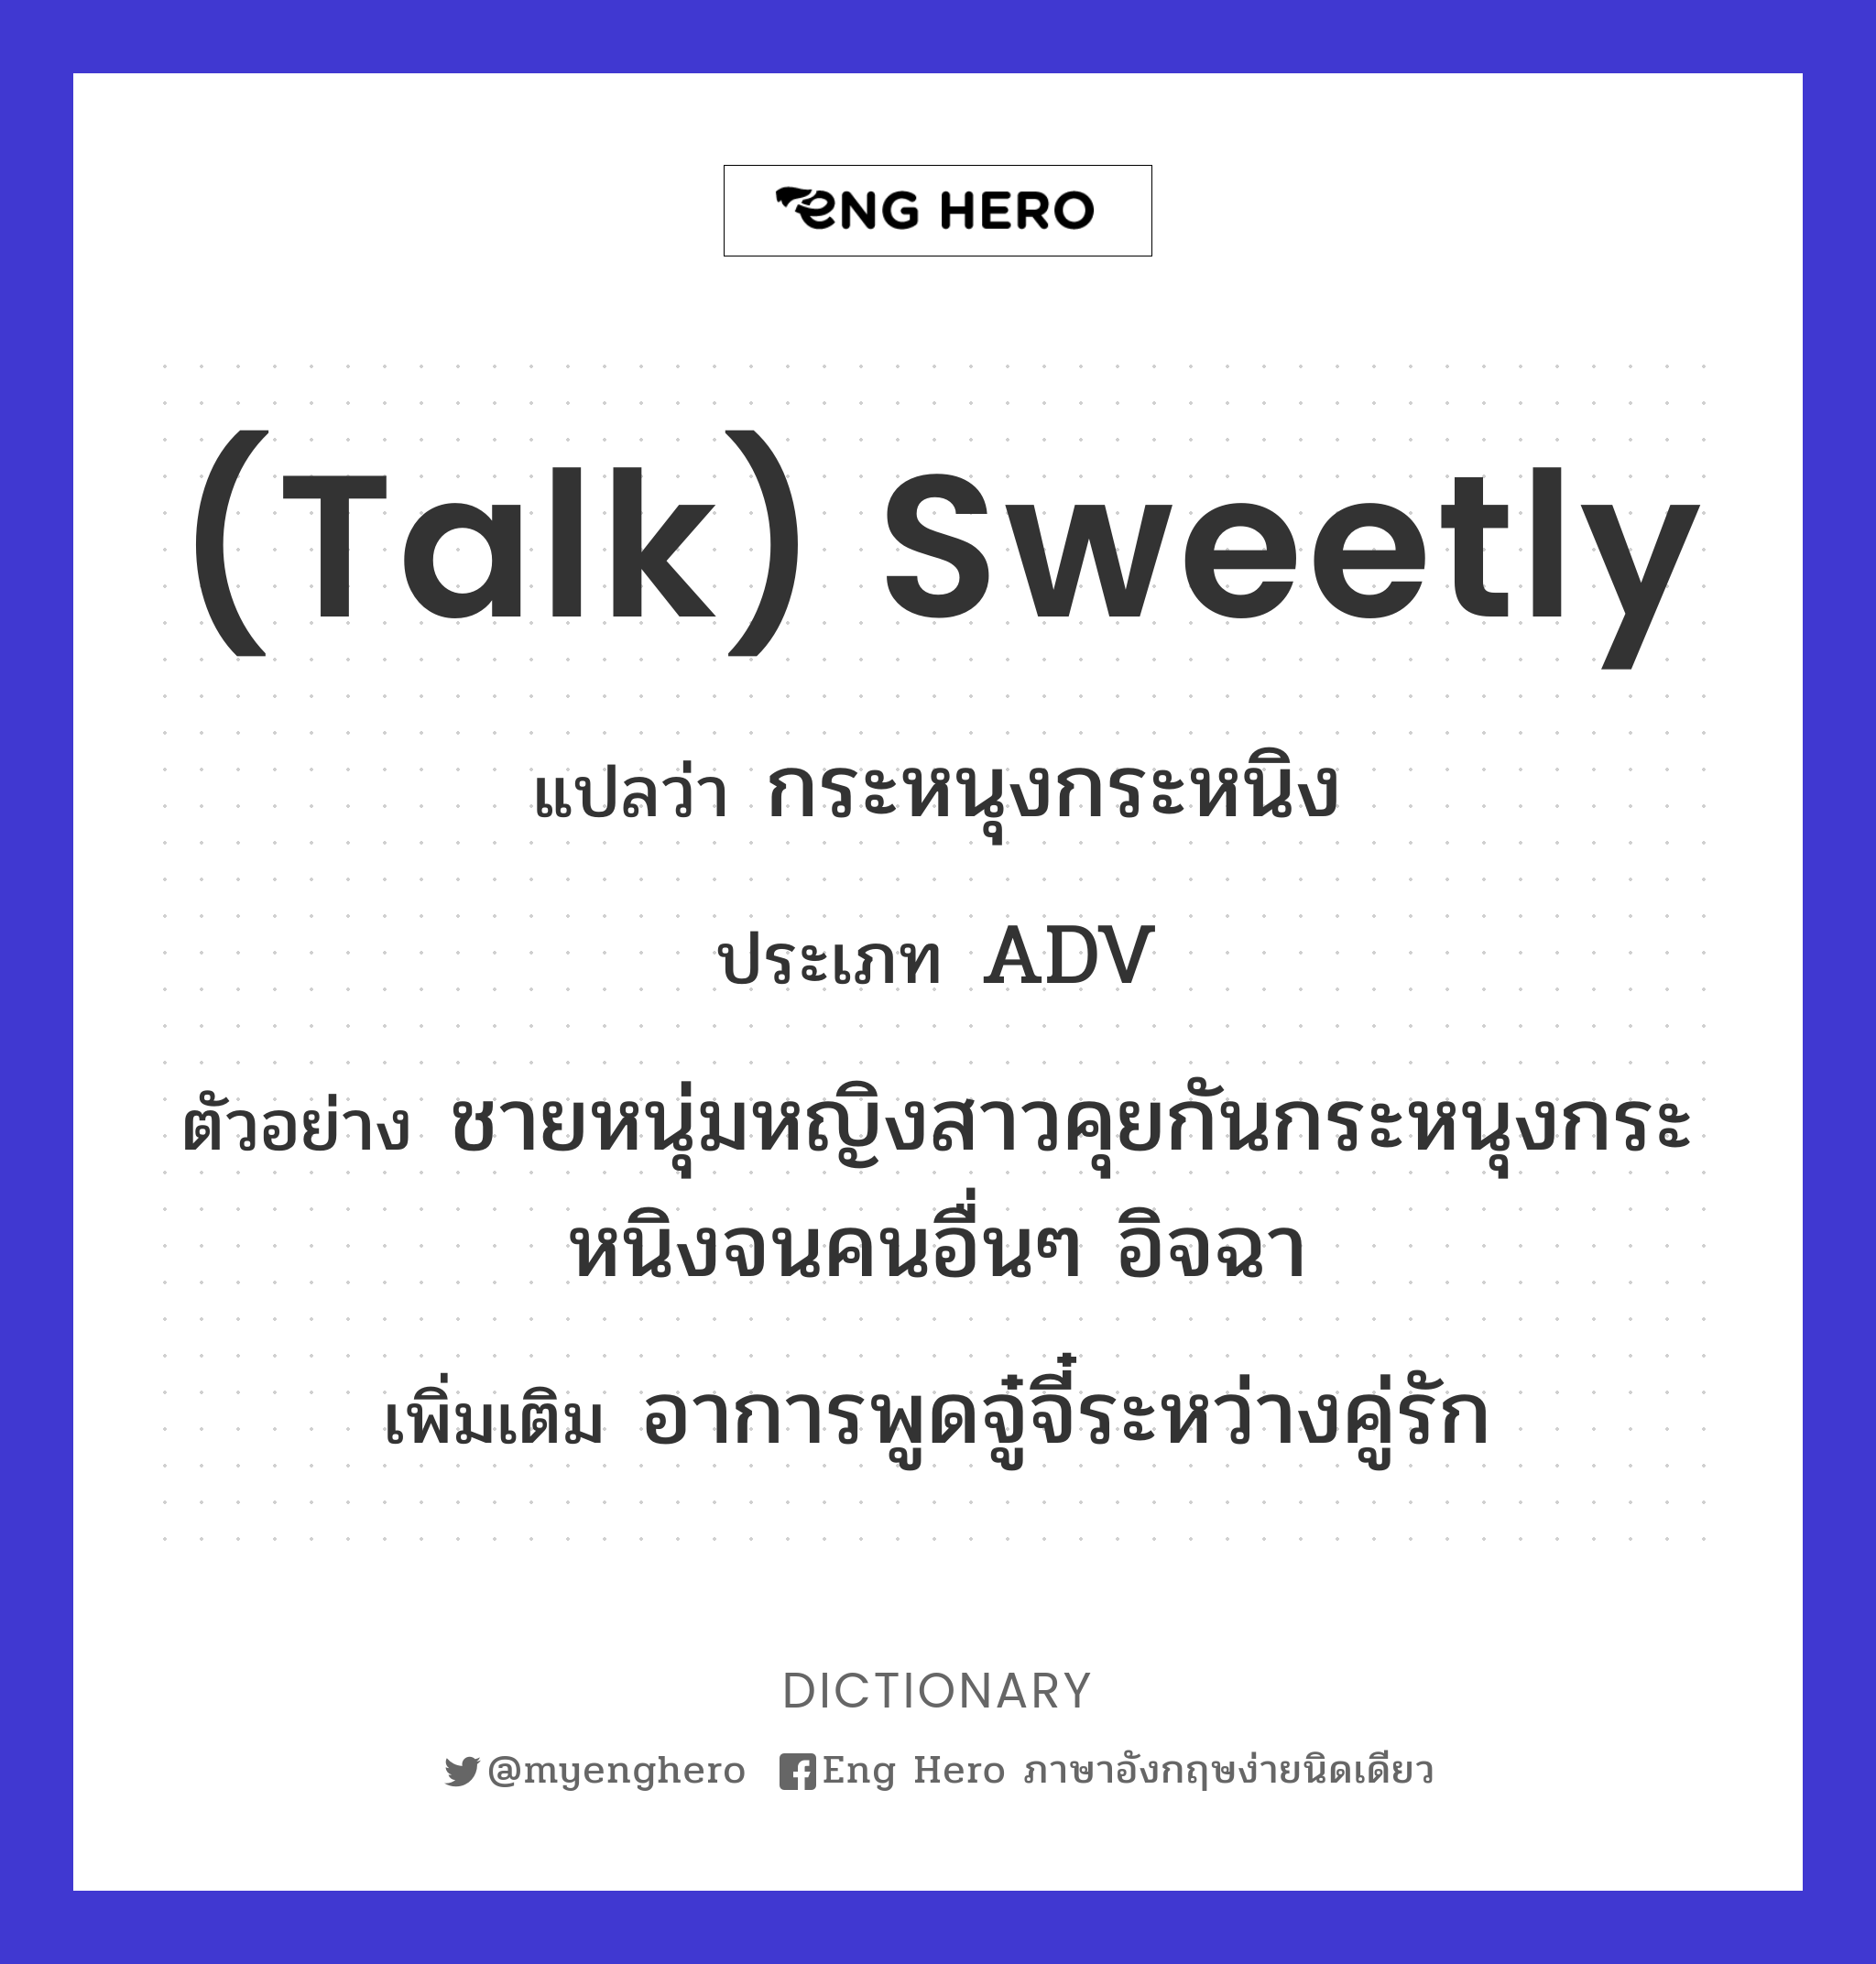 (talk) sweetly